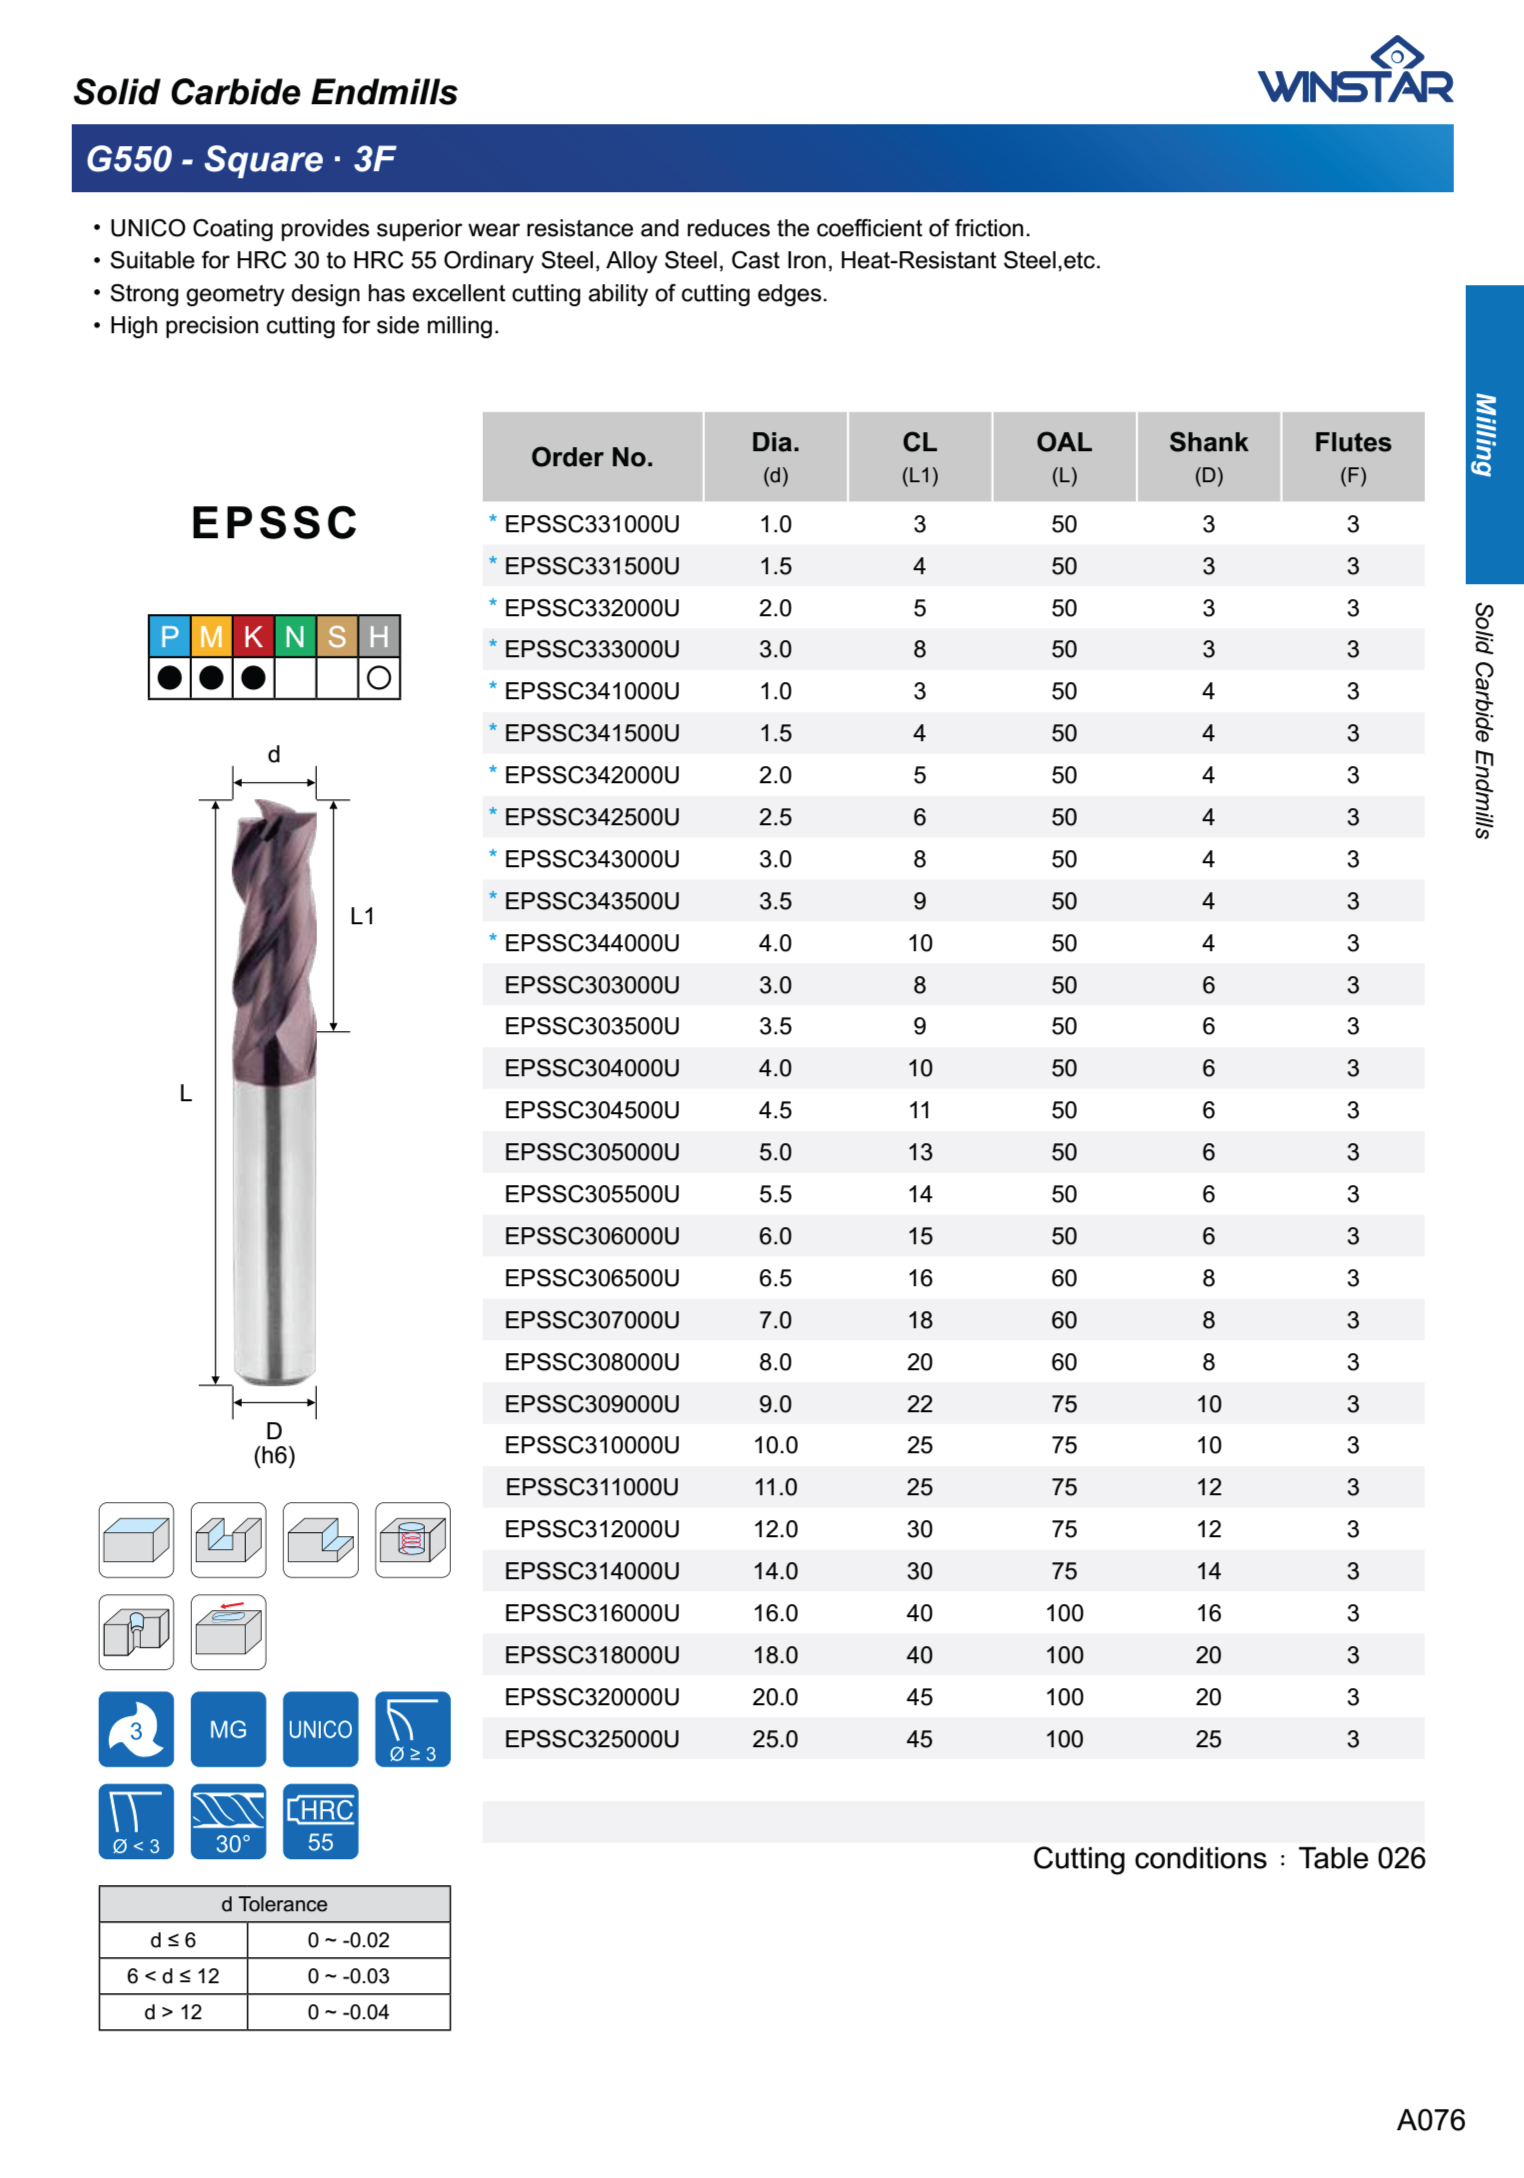 Dao phay ngón solid carbide endmills G550 Series EPSSC Winstar 1